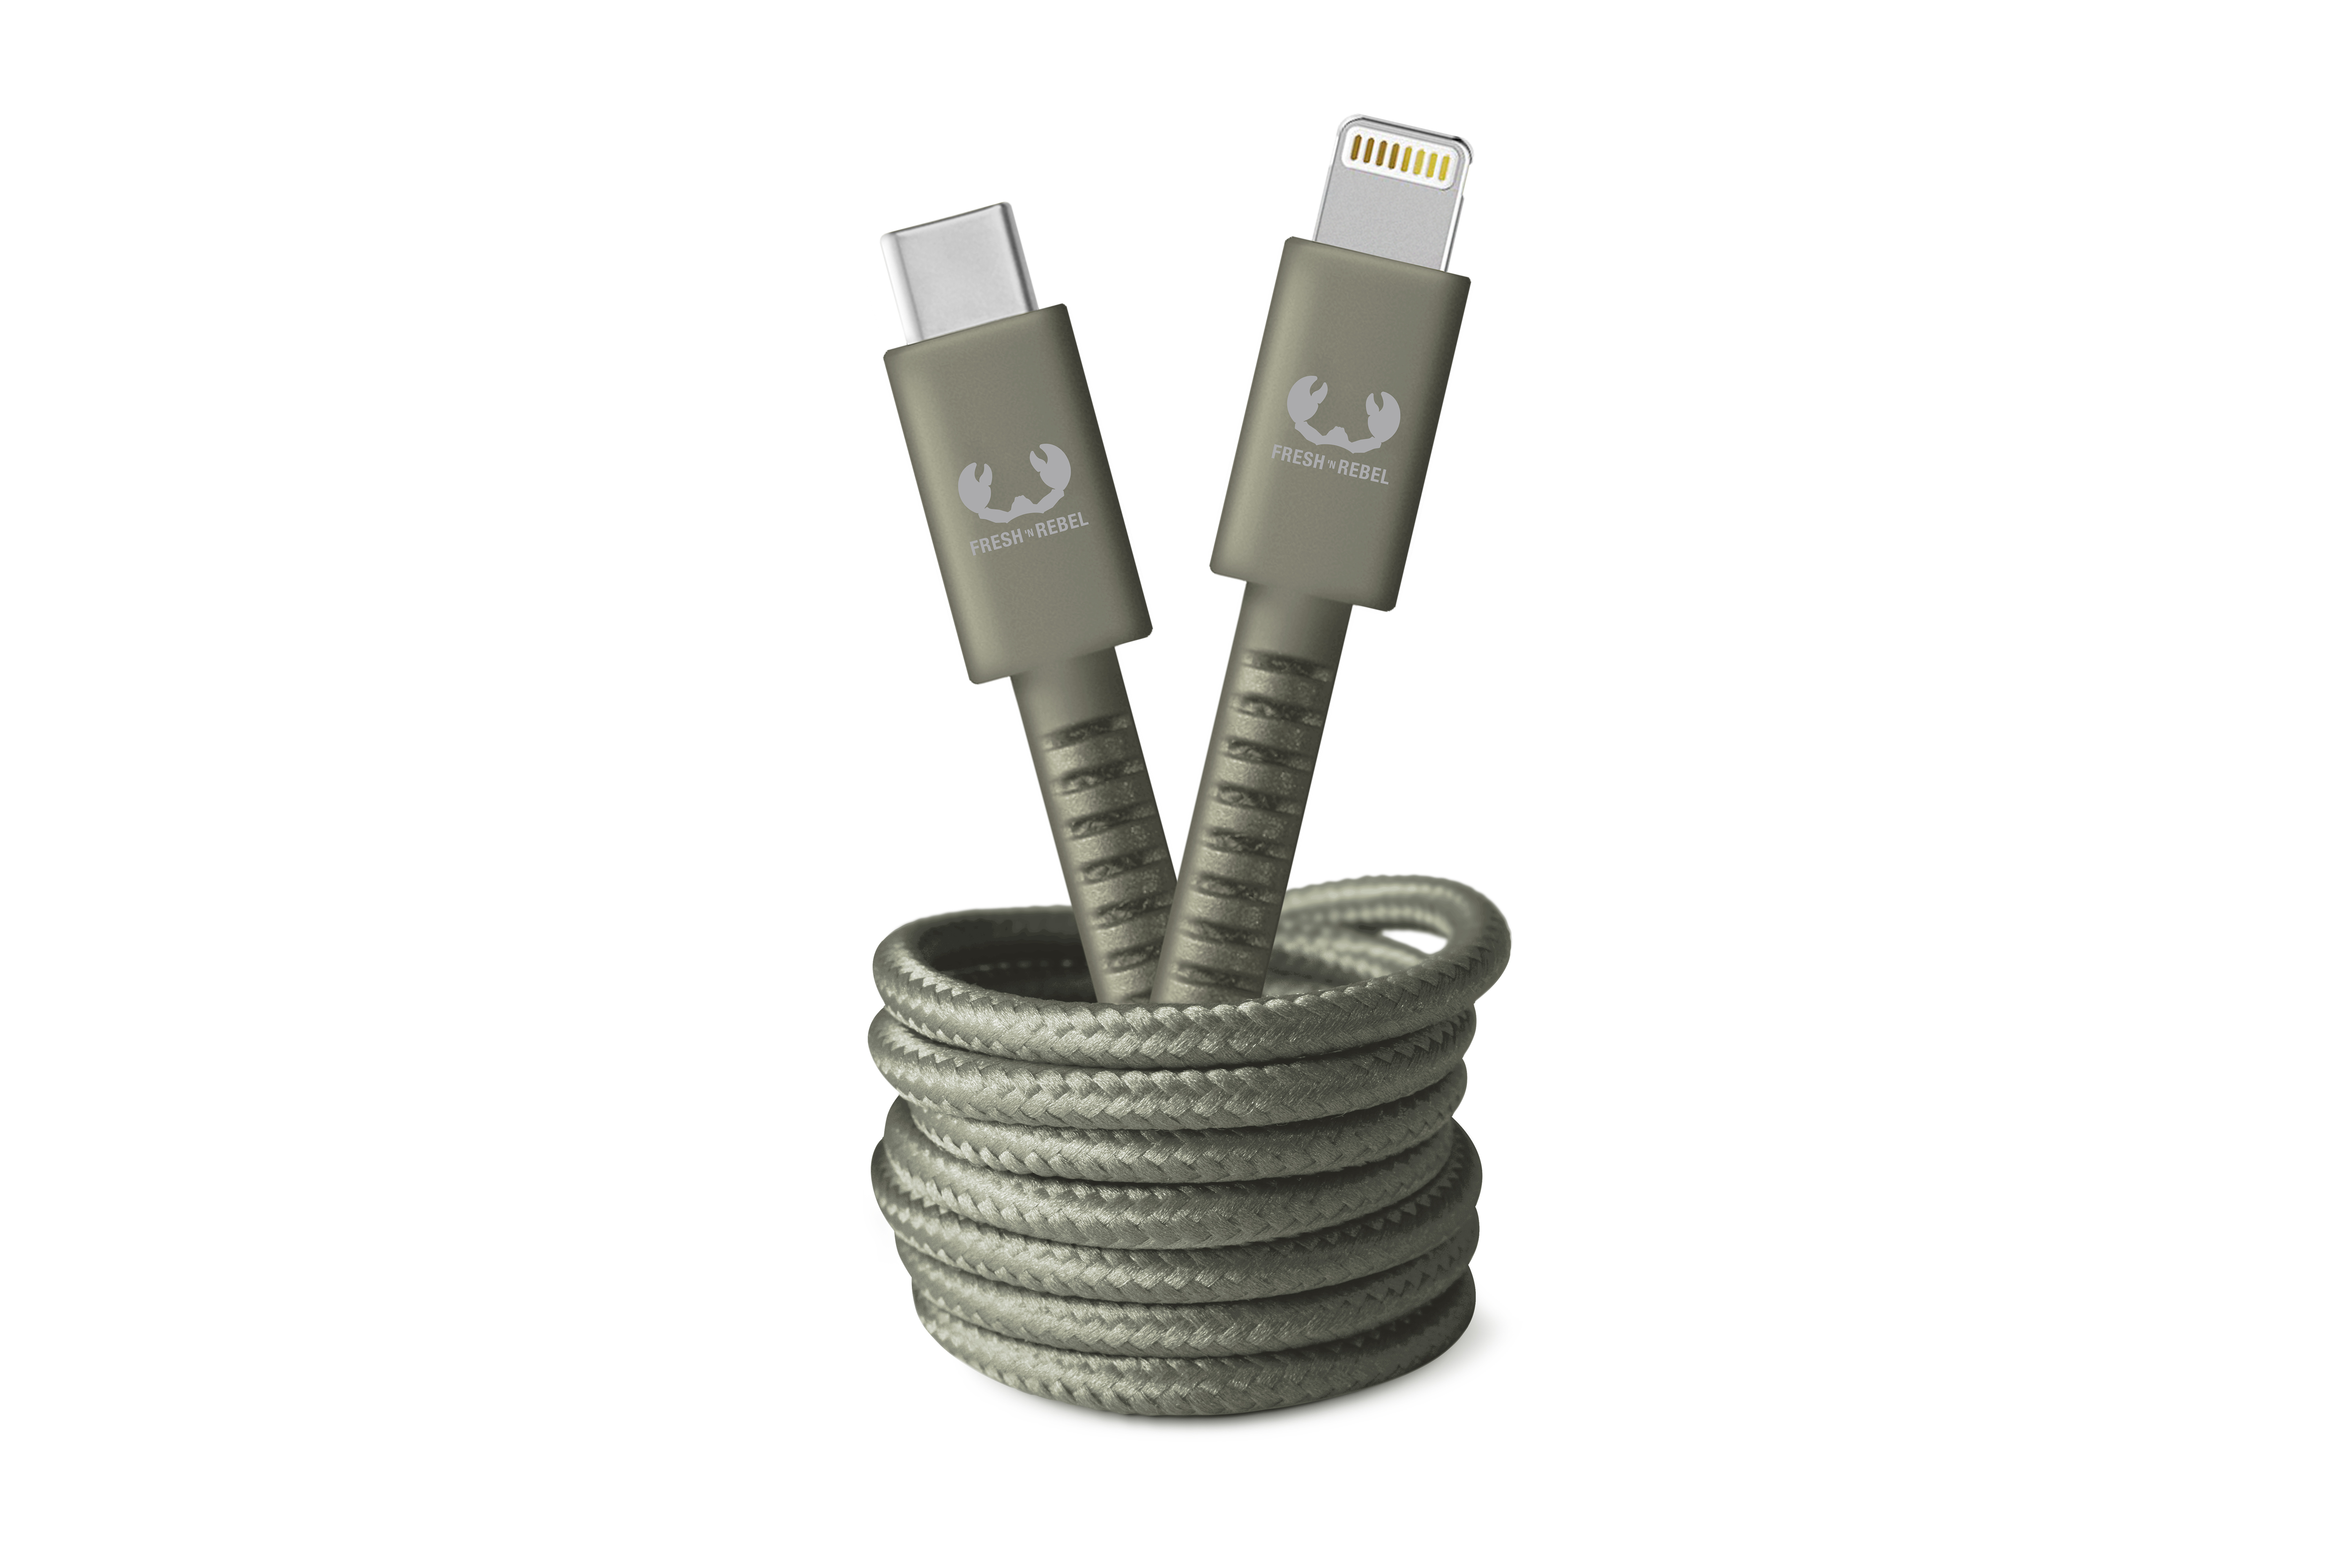 FRESH USB-C Fabriq Green 2 2.0m, Apple Lightning Ladekabel, cable - \'N - REBEL Dried m,